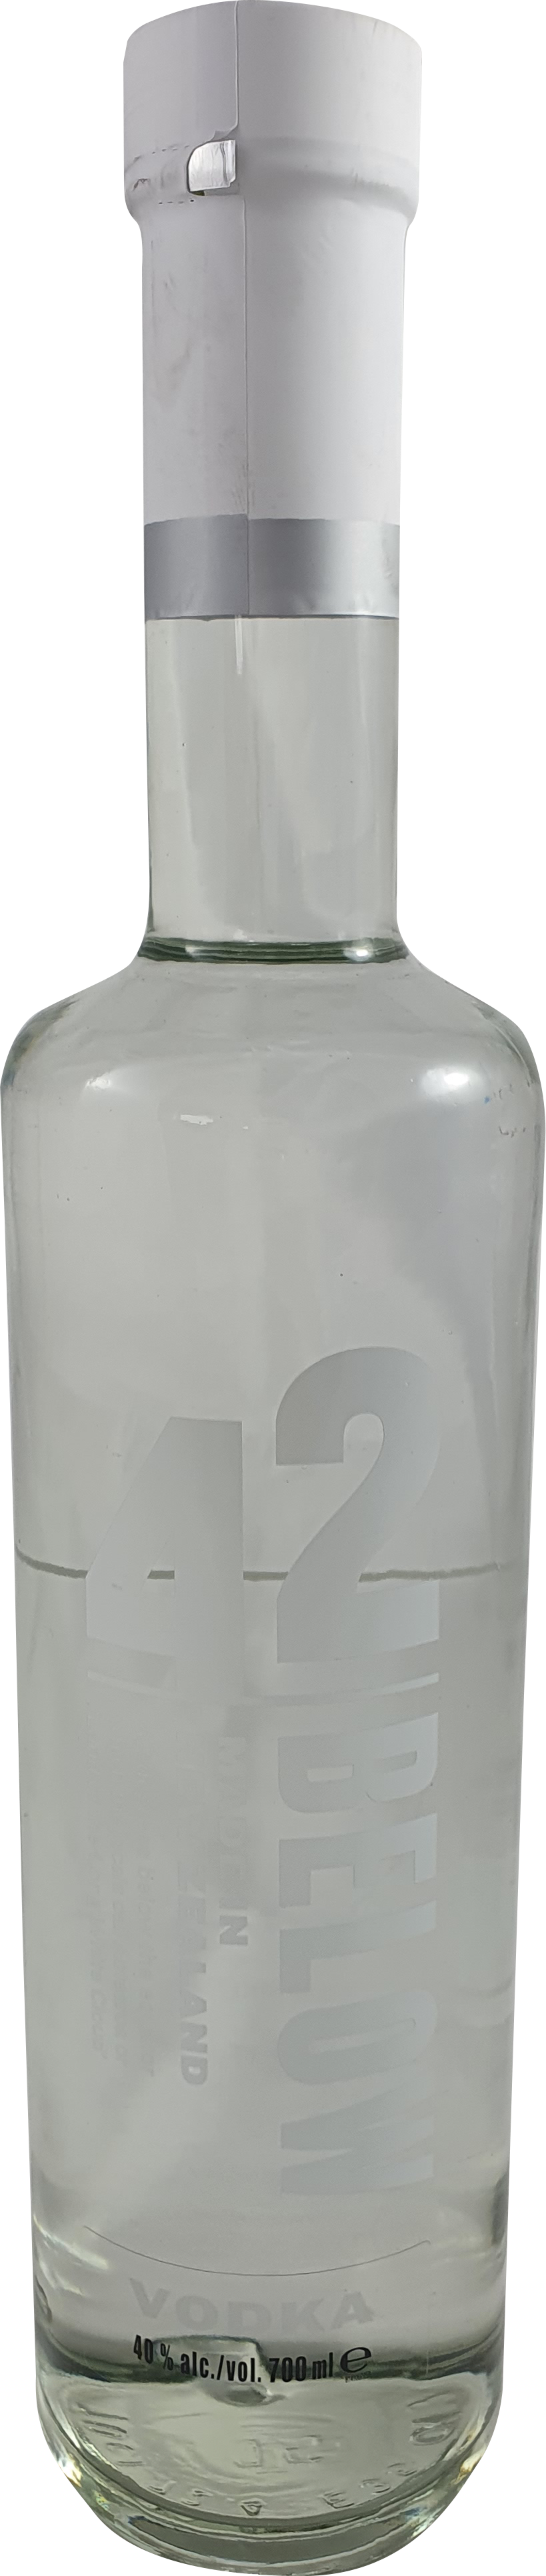 42 Below Neusee Vodka 40% 0,7l